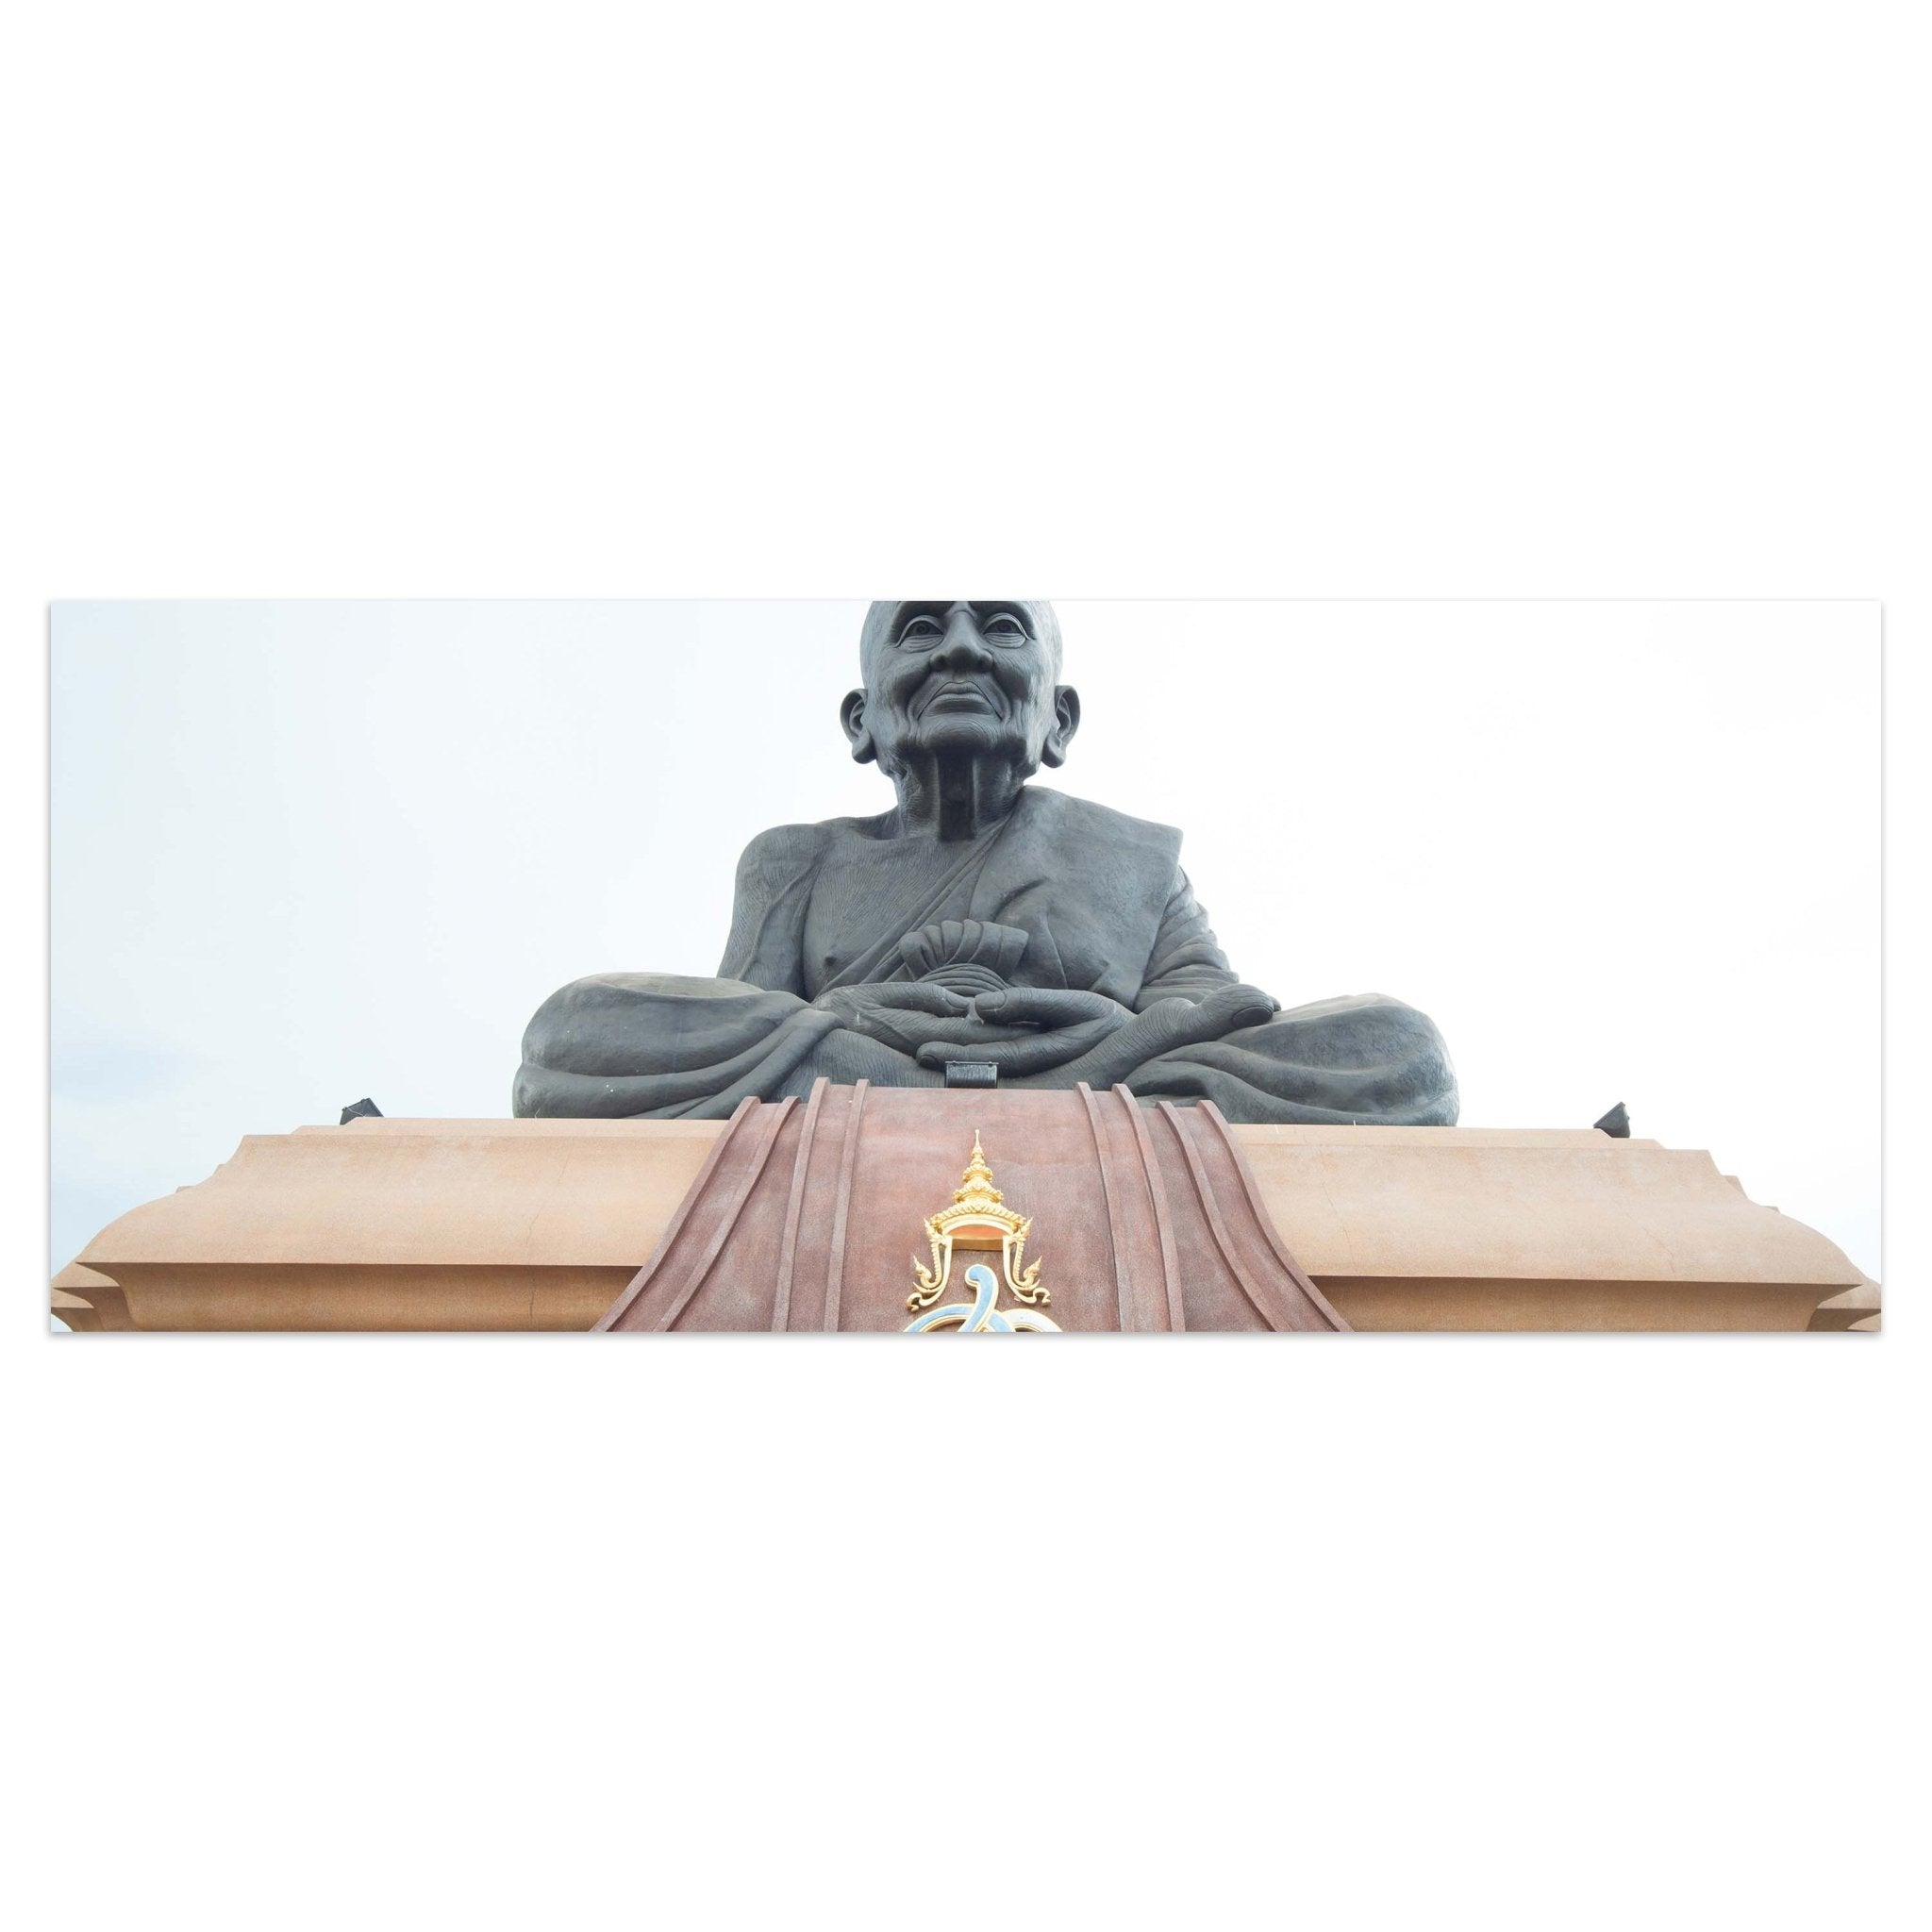 Leinwandbild Statue in einem berühmten Tempel in Thailand M0953 kaufen - Bild 1